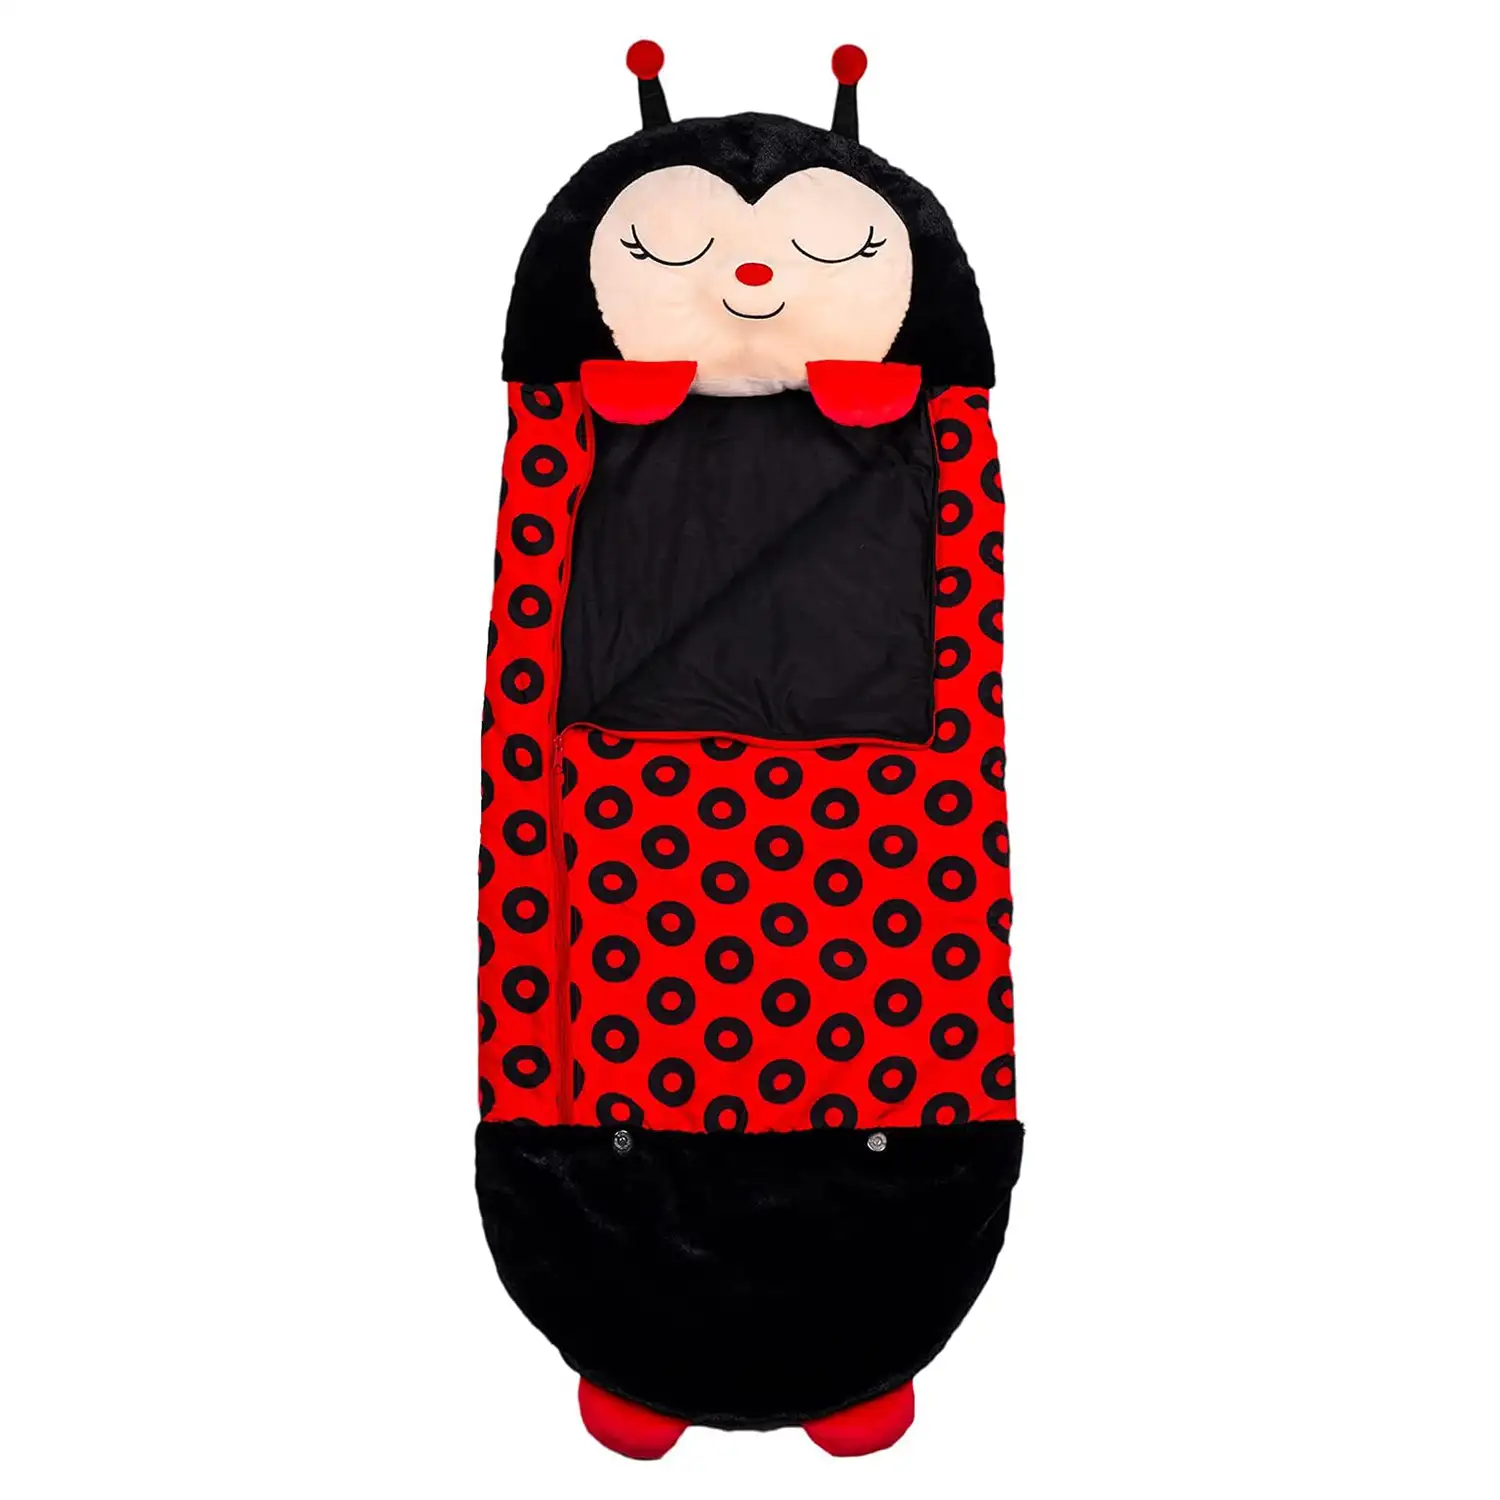 Saco de dormir convertible en almohada, para niños, Mariquita. Tacto peluche. Pequeño / S: 128x45cm.